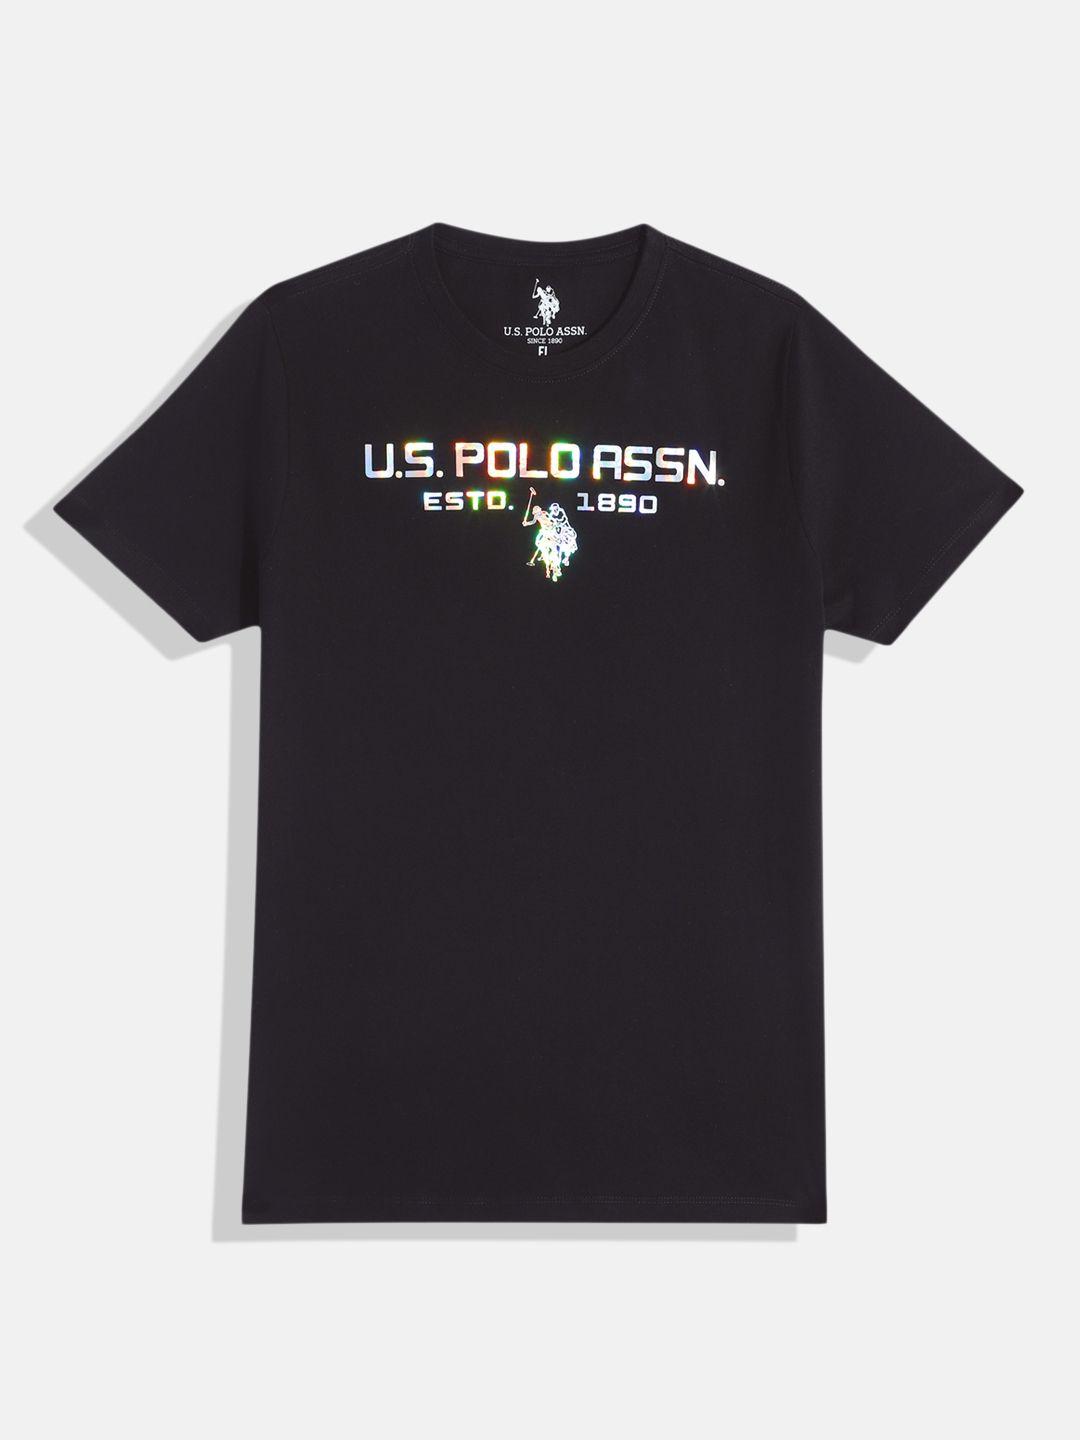 u.s. polo assn. kids boys brand logo printed t-shirt